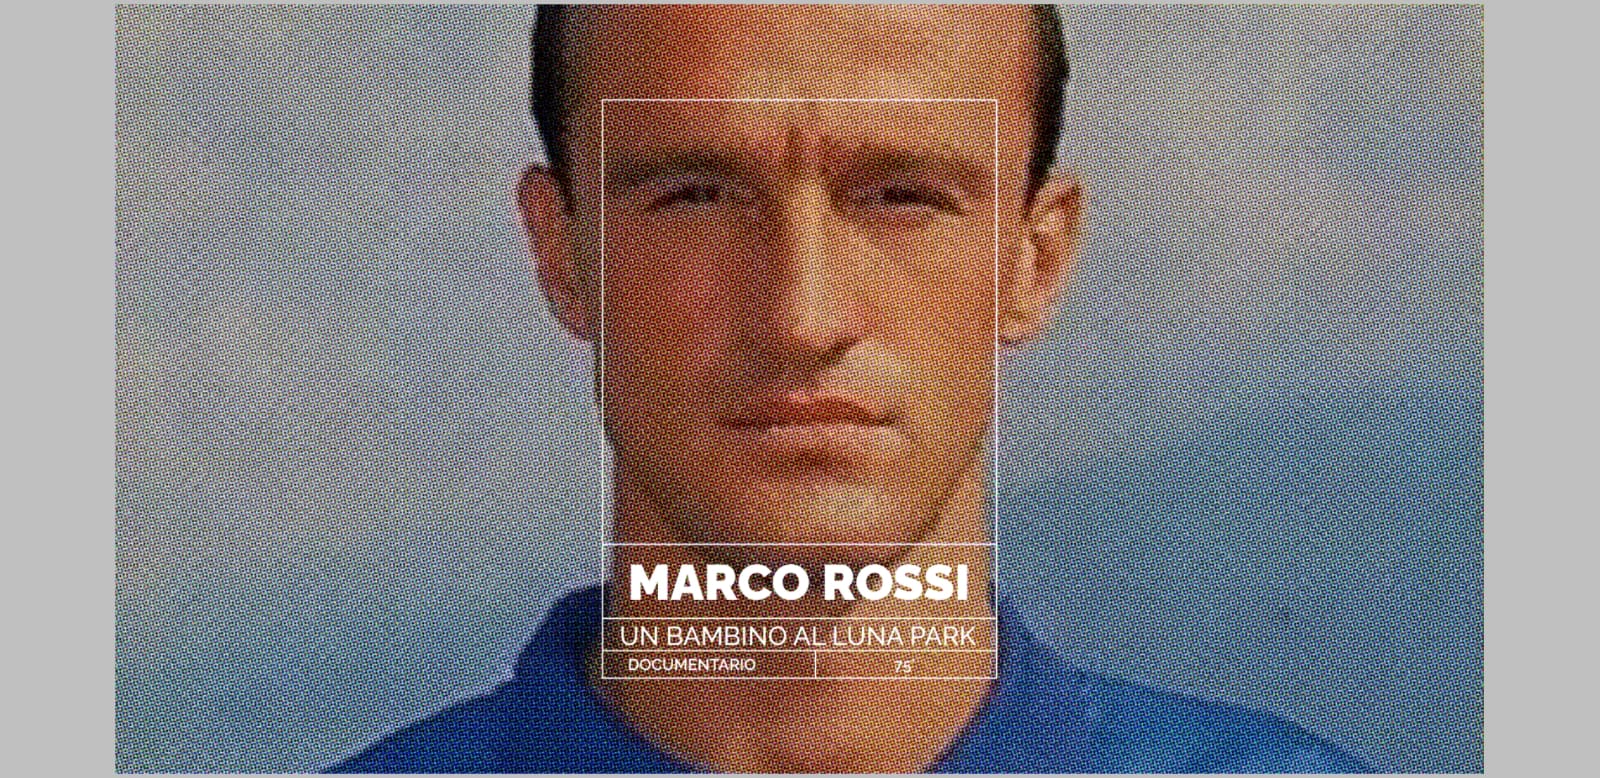 Marco Rossi, un bambno al Luna Park